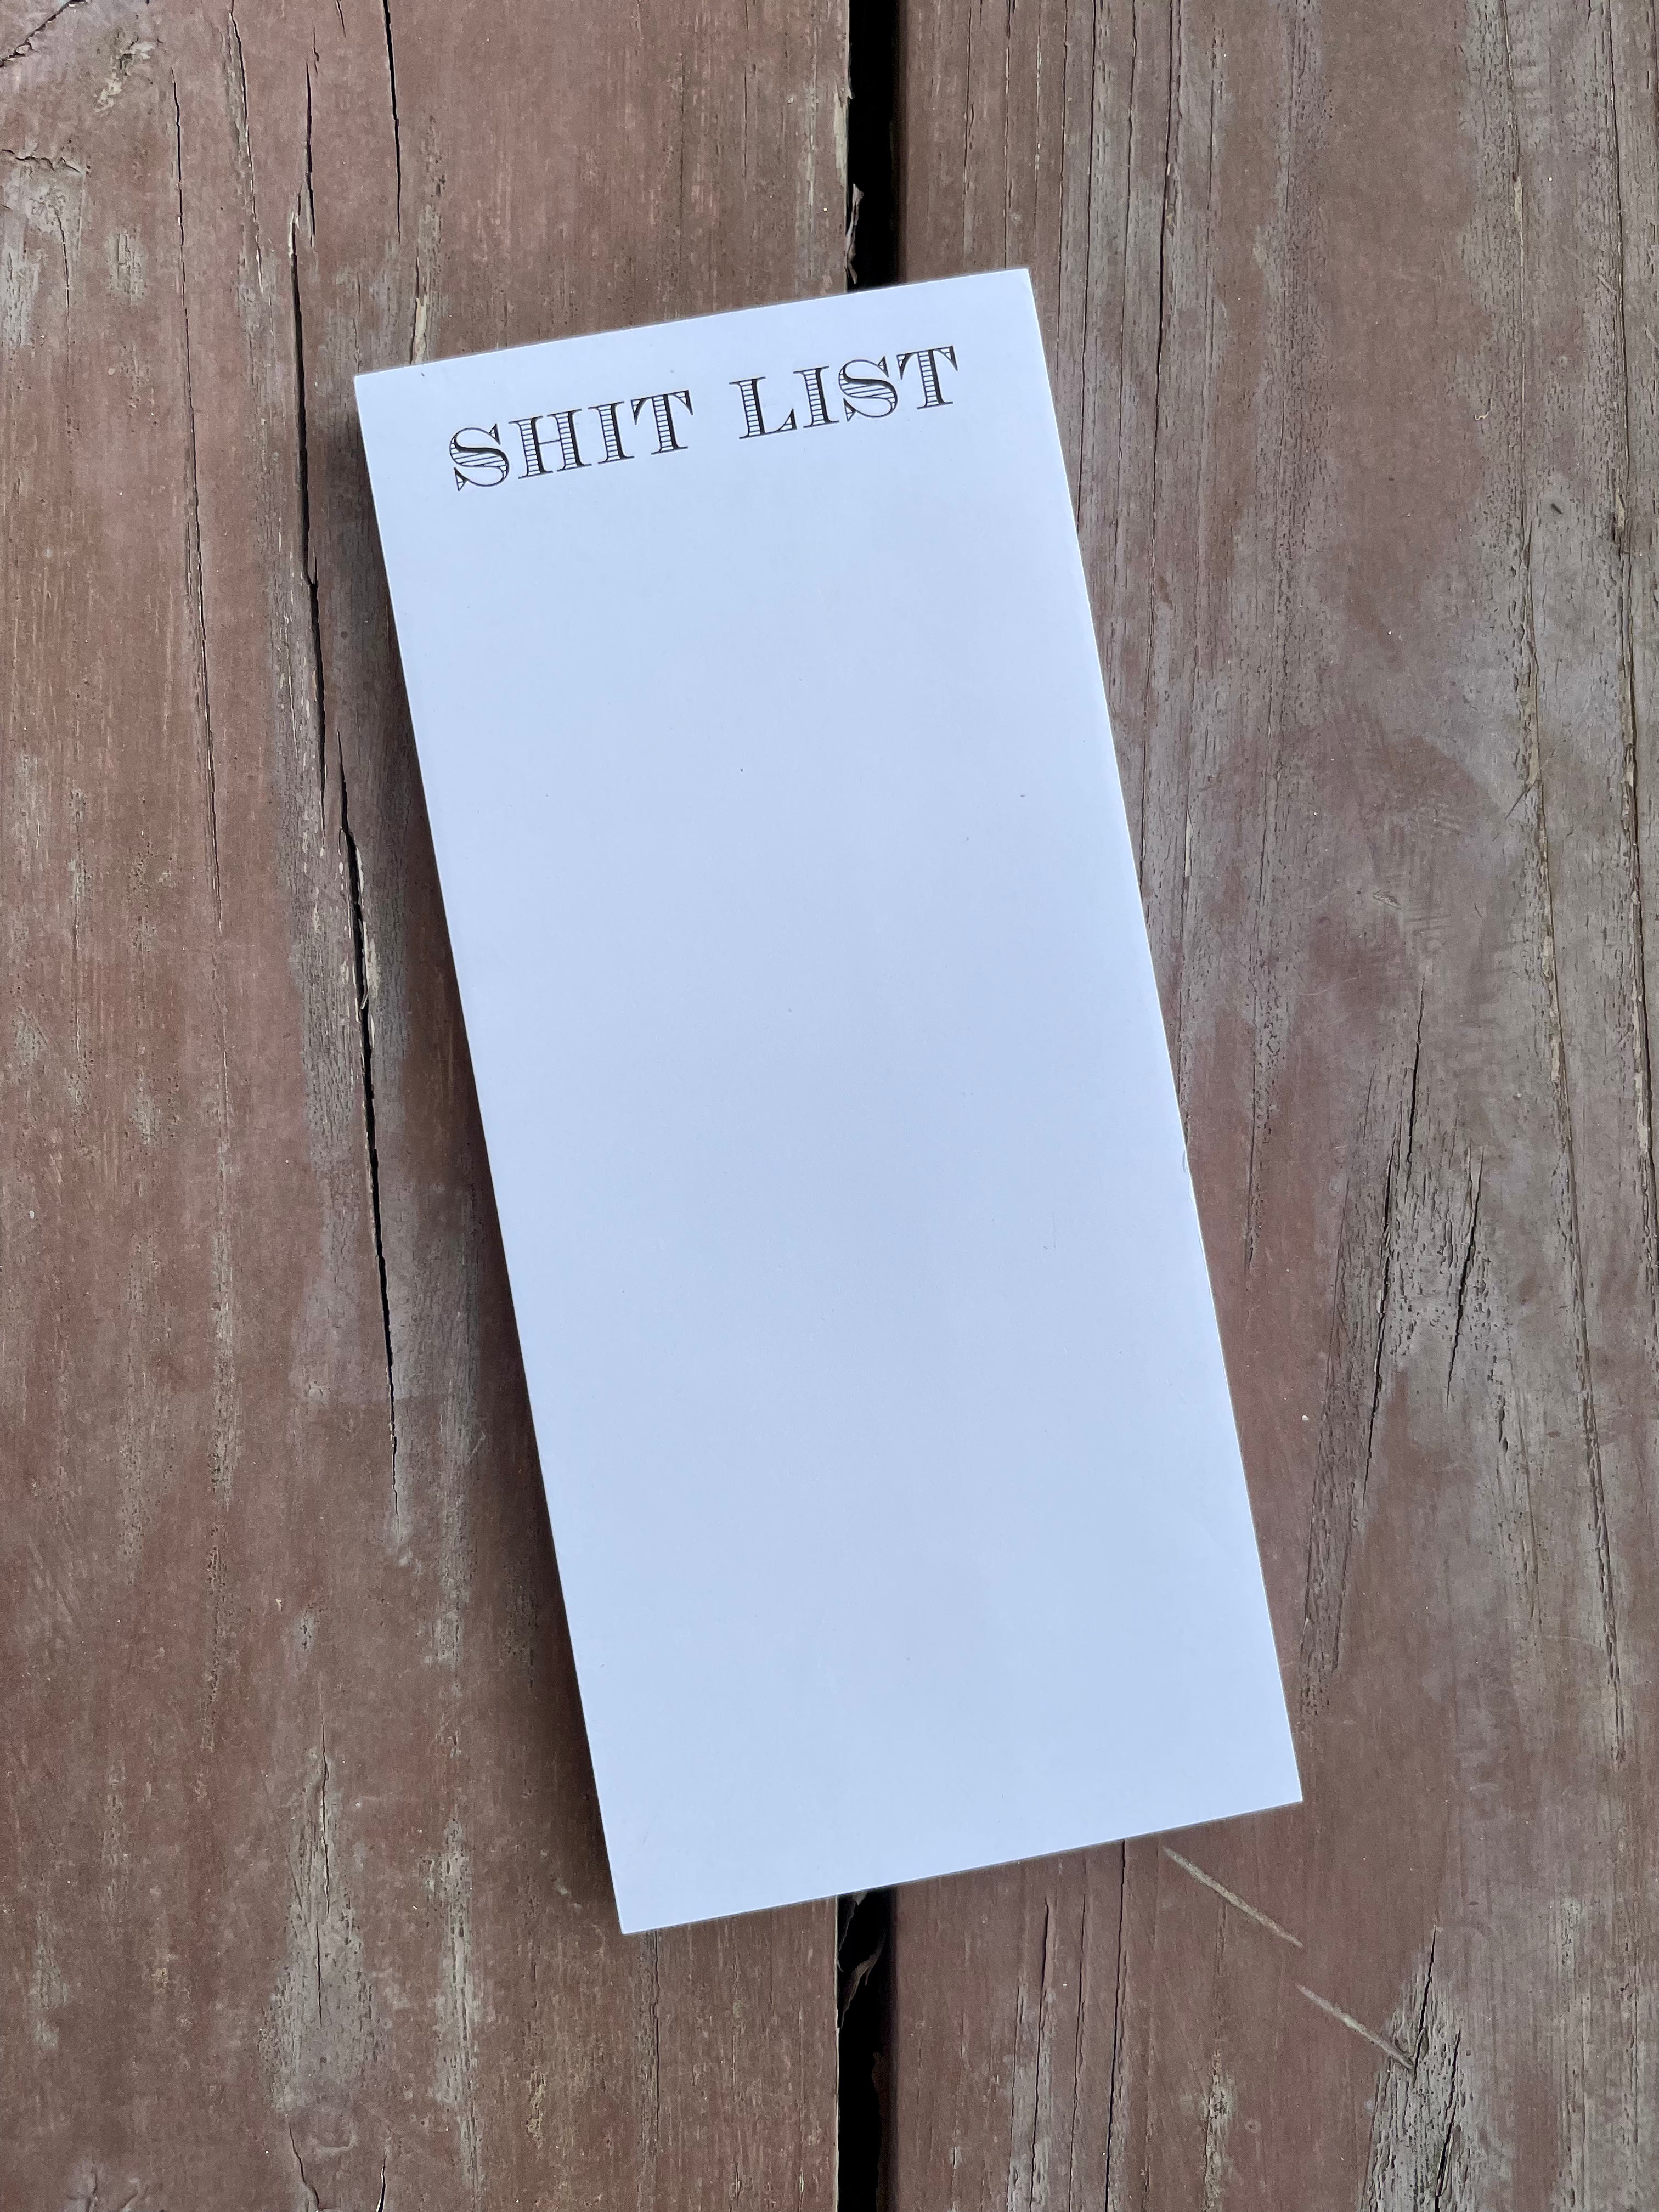 Shit List Notepad